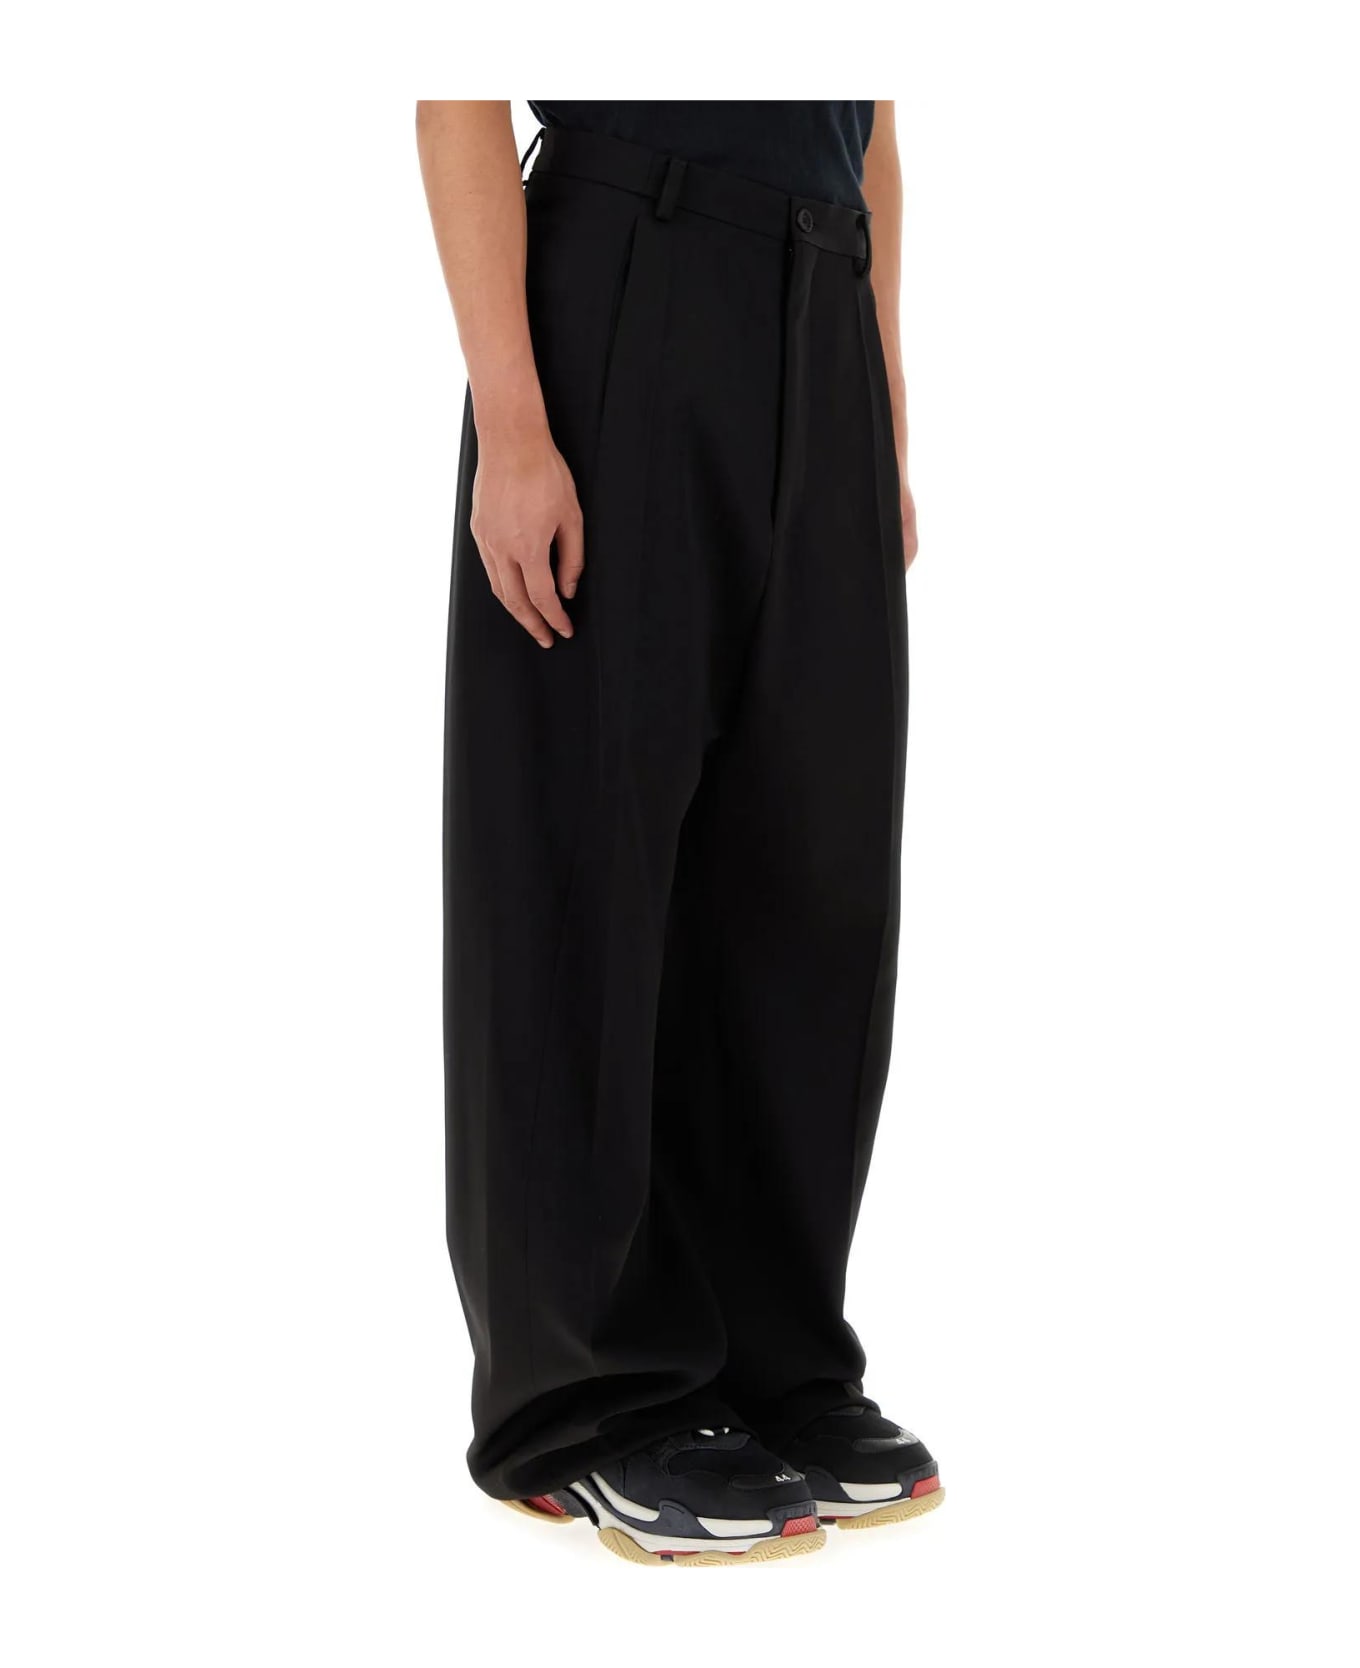 Balenciaga Pants In Black Wool - NERO ボトムス